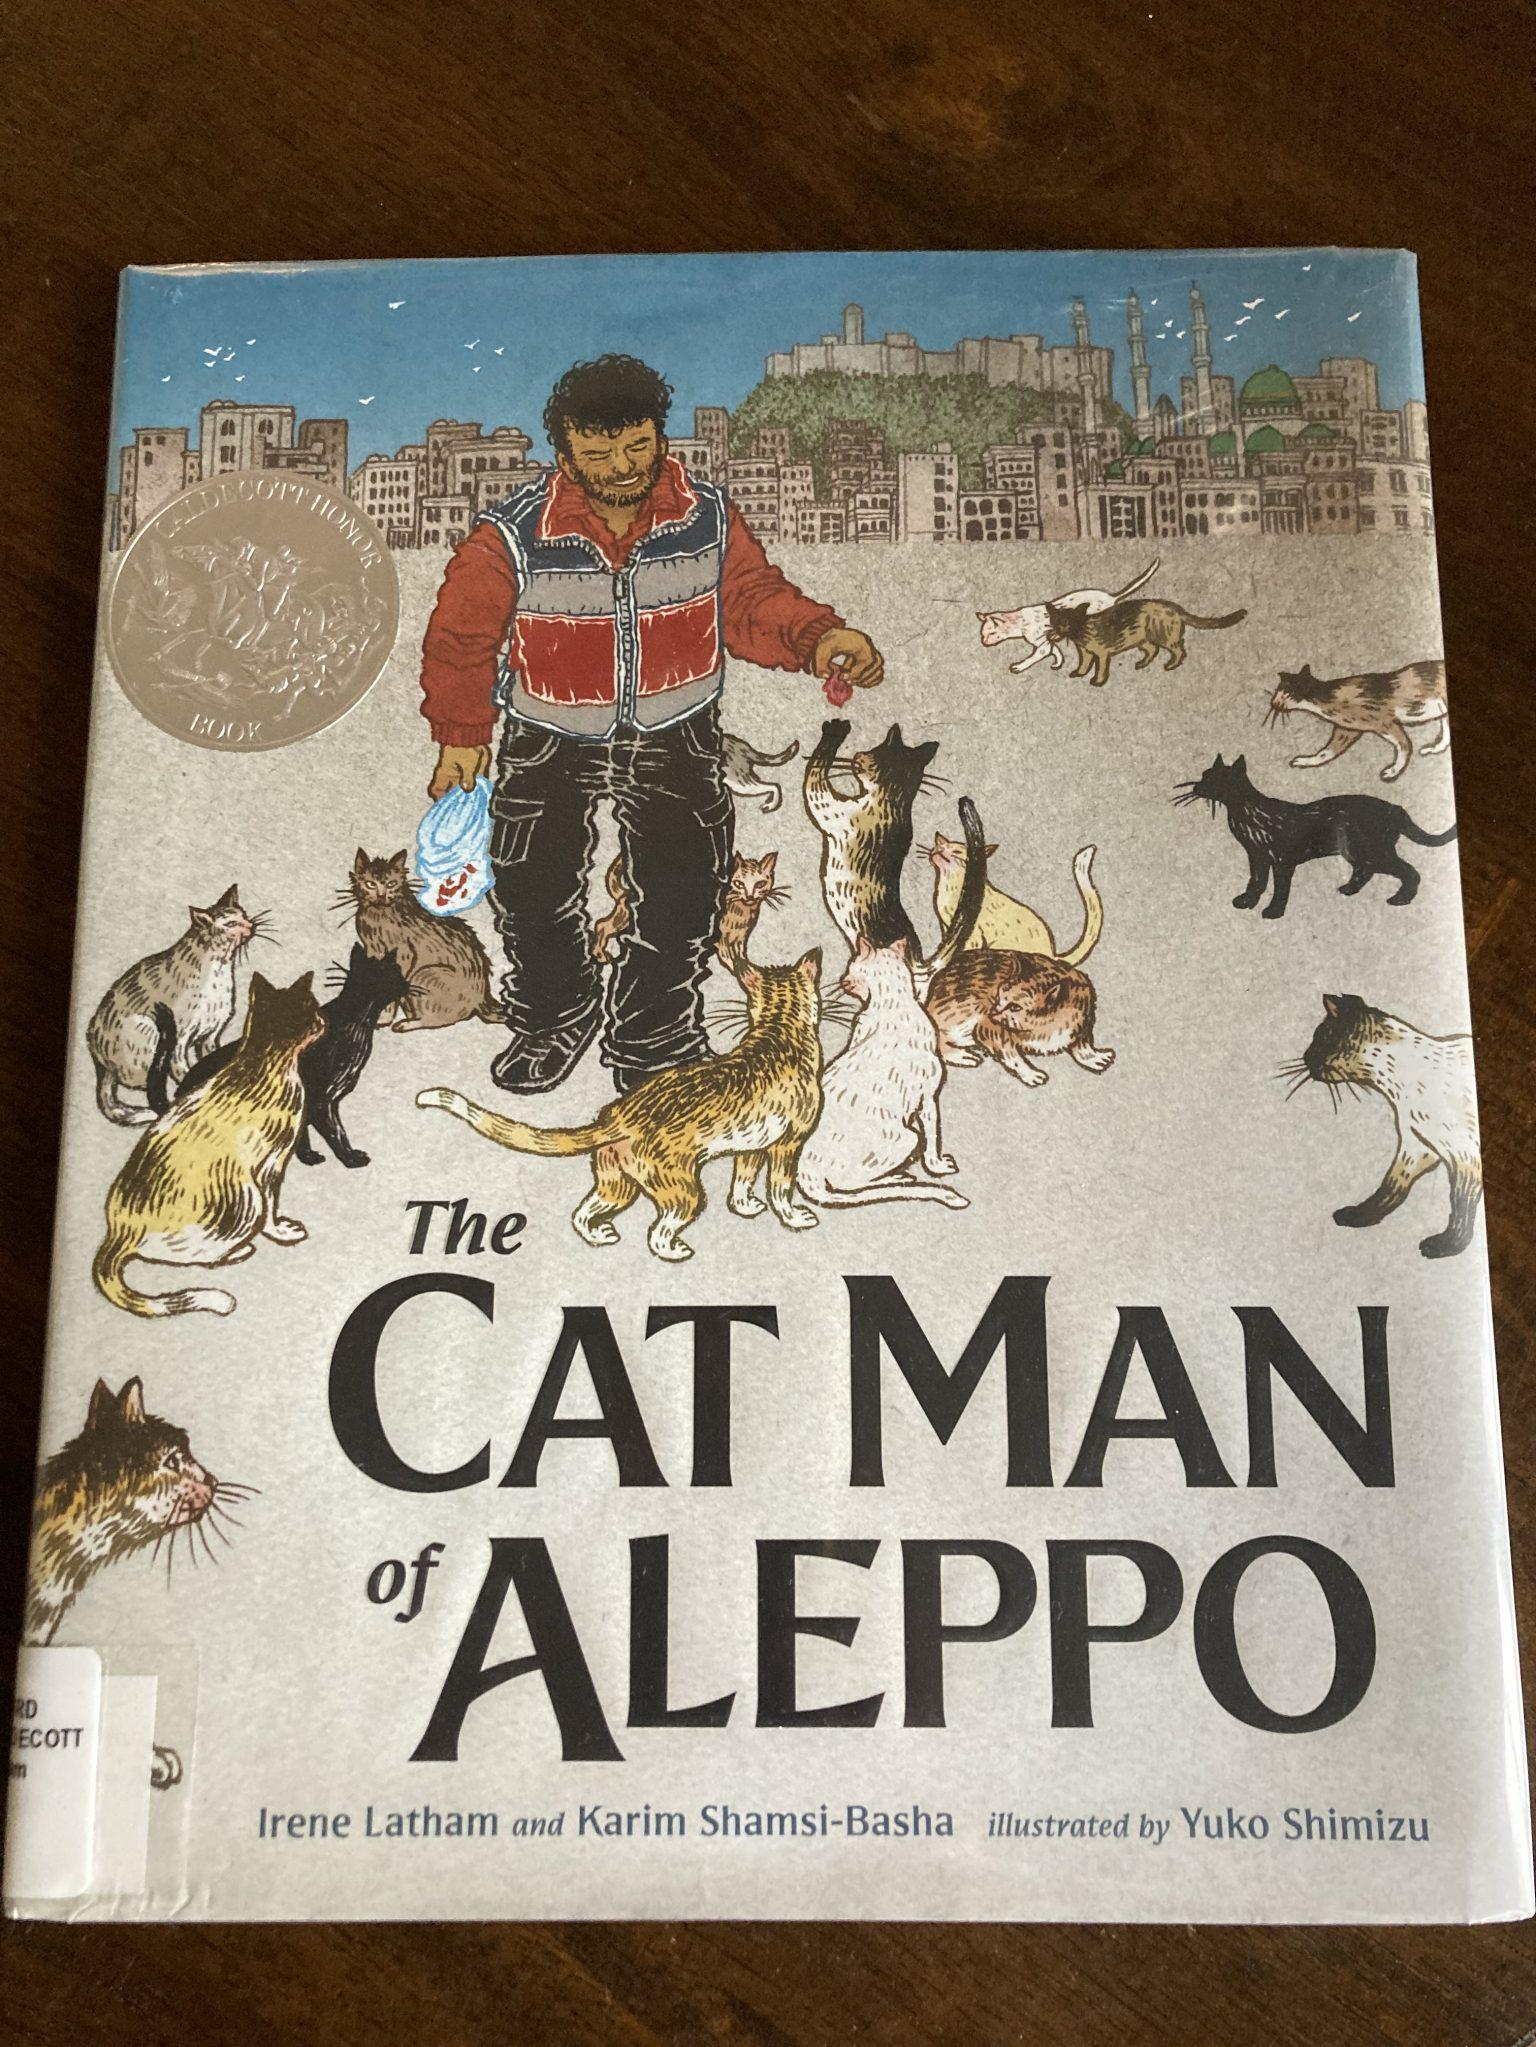 The Cat man of Aleppo